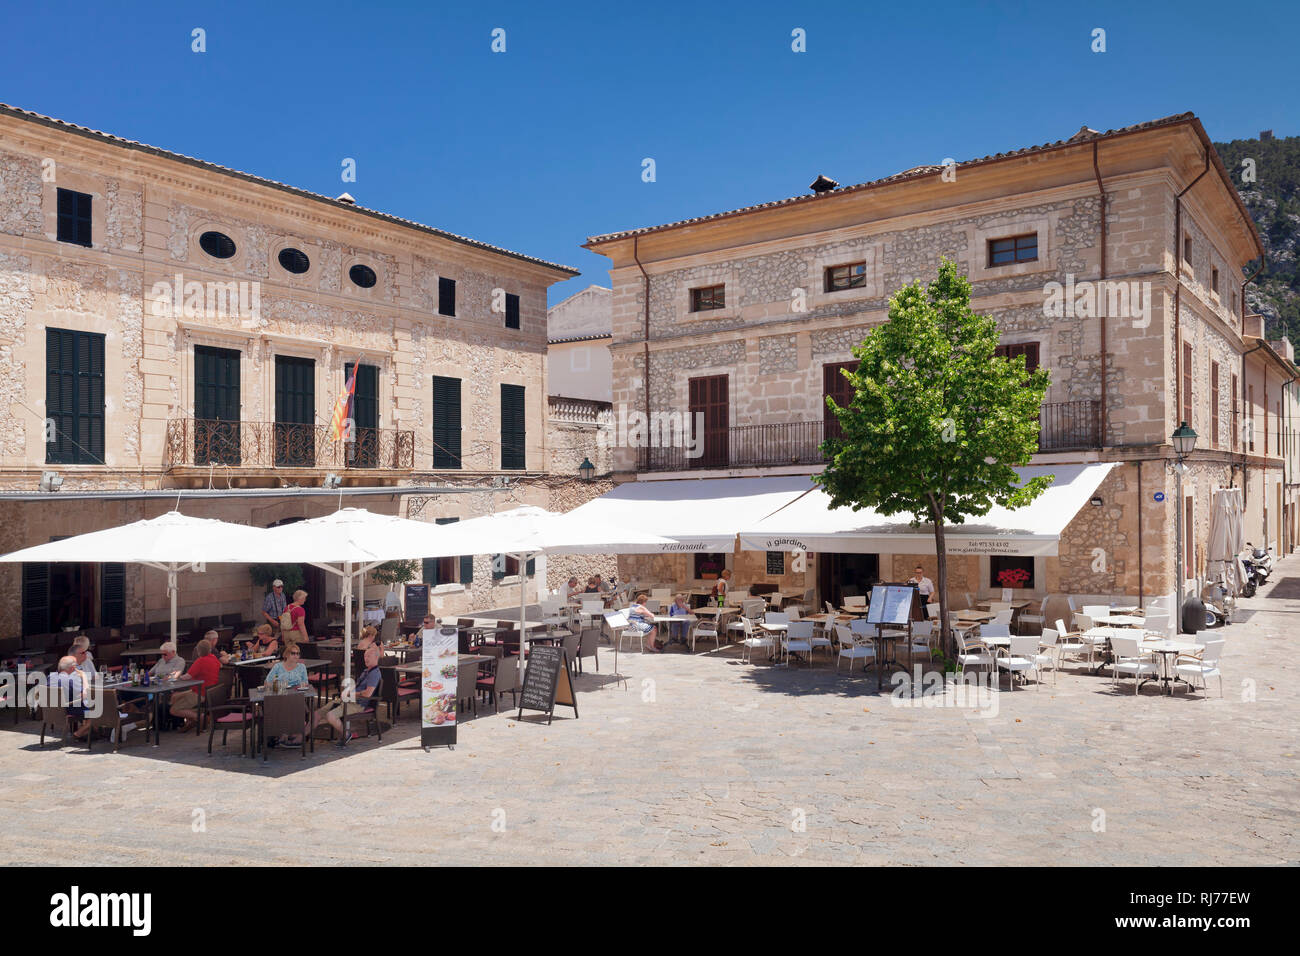 Restaurants und Straßencafes am Marktplatz Placa Major, Pollenca, Mallorca, Balearen, Spanien Stock Photo